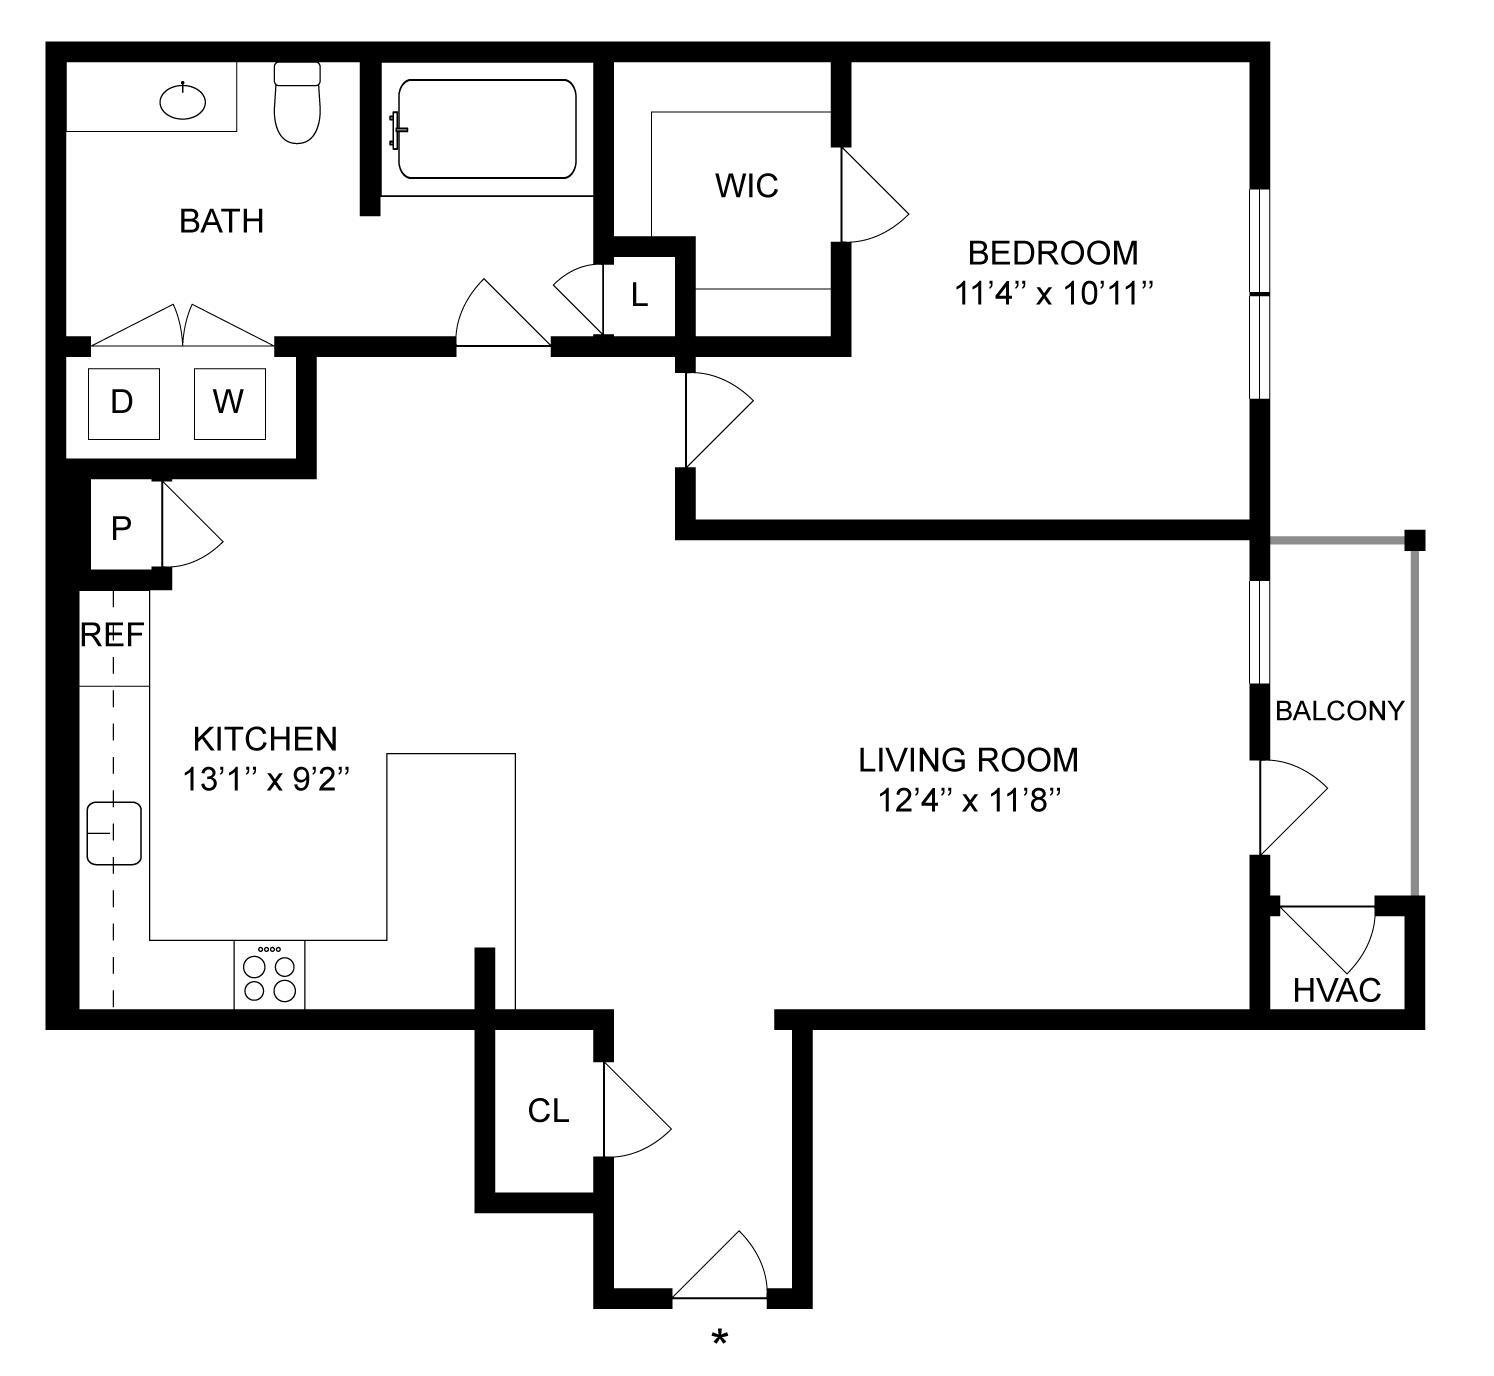 Floorplan for Apartment #08-B13, 1 bedroom unit at Halstead Hopkinton